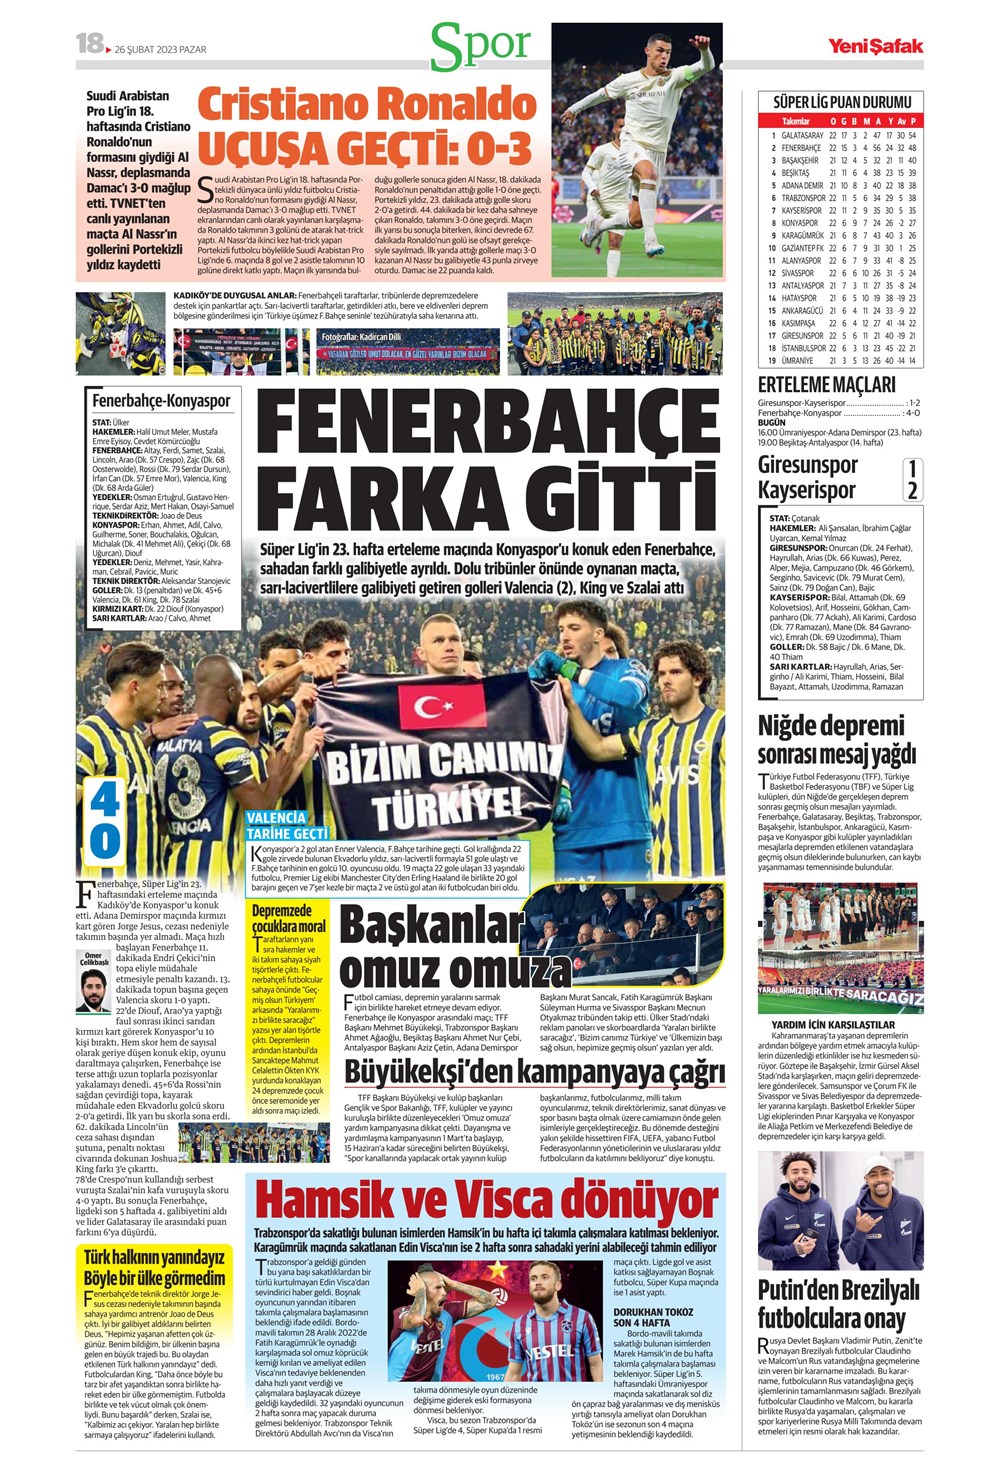 "Valenci'ağa' böyle istedi" - Sporun manşetleri  - 35. Foto